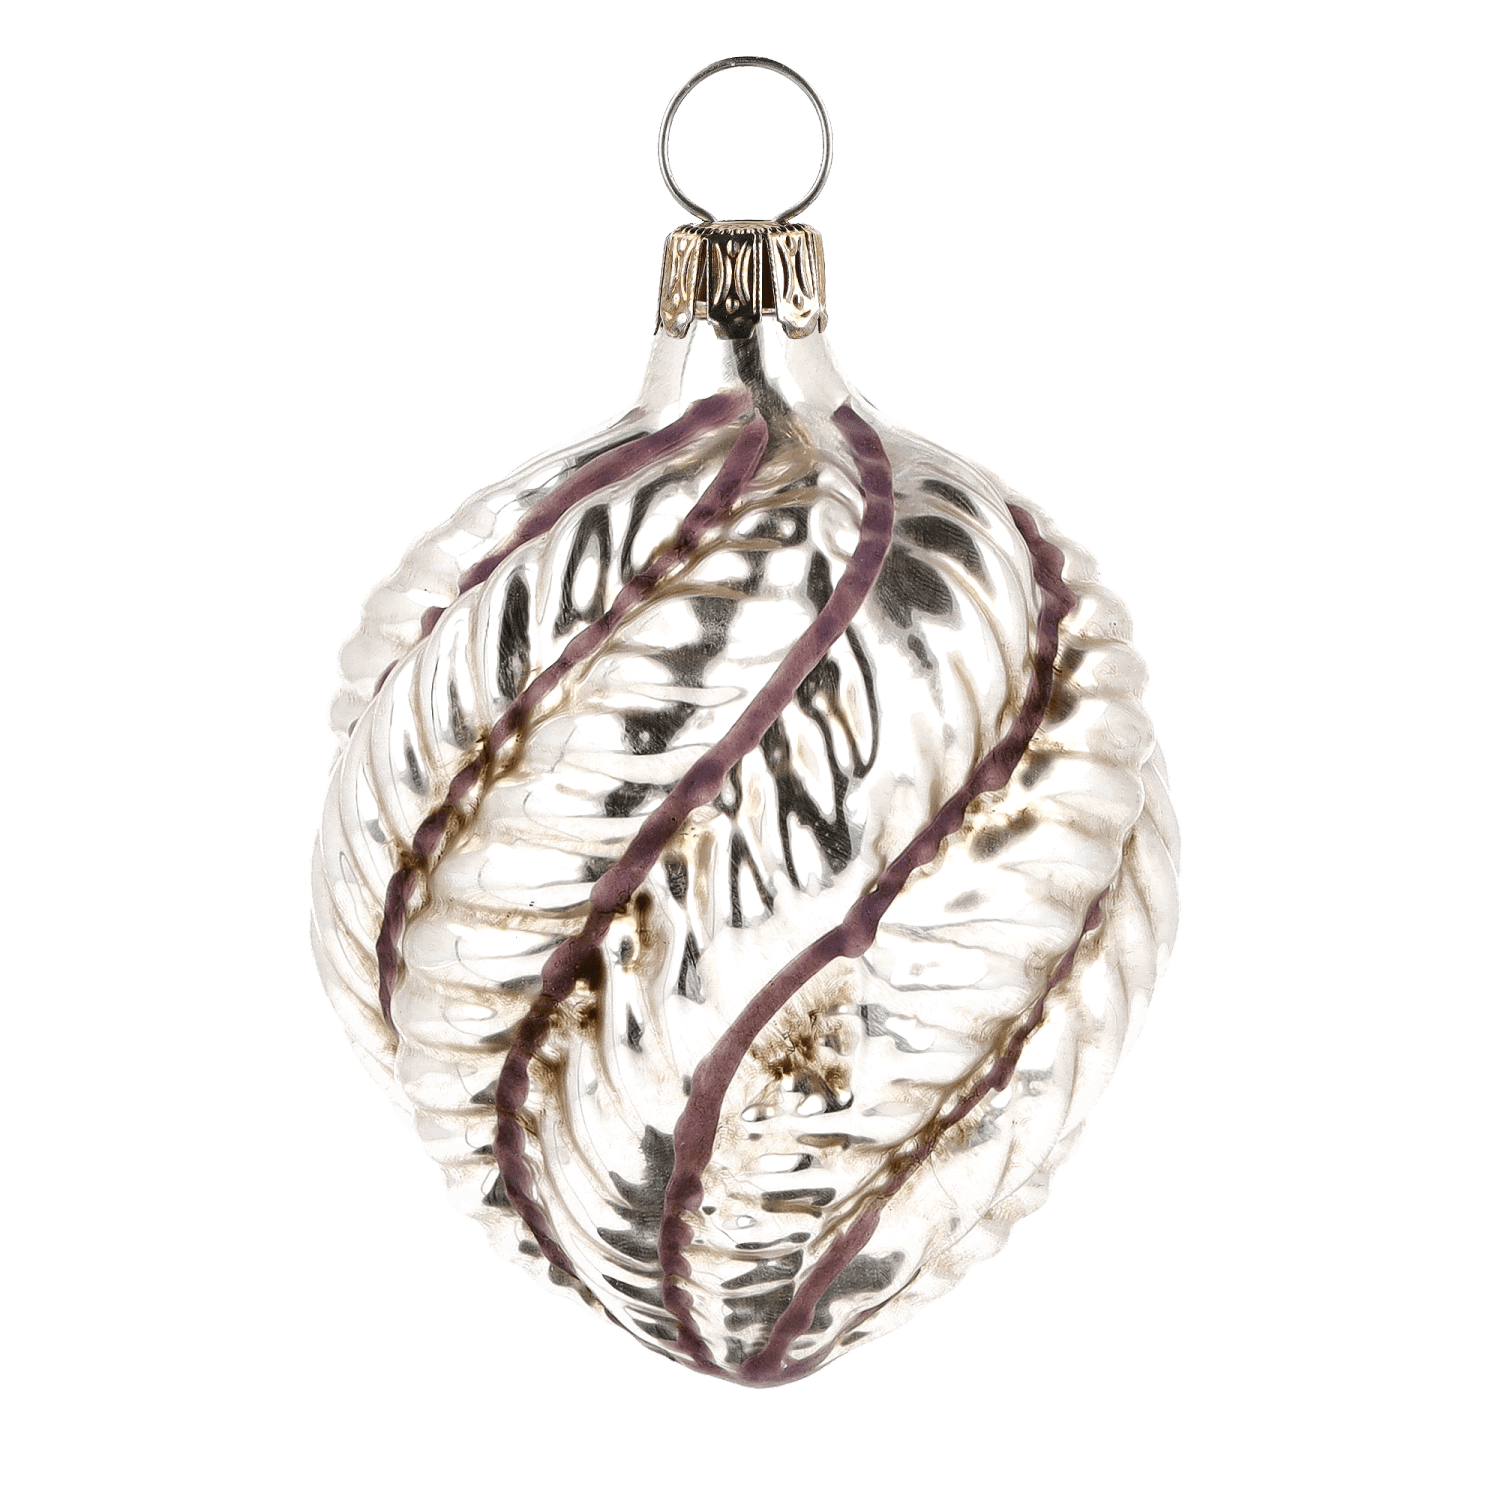 MAROLIN® - Glass ornament "Oval with violet stripes"